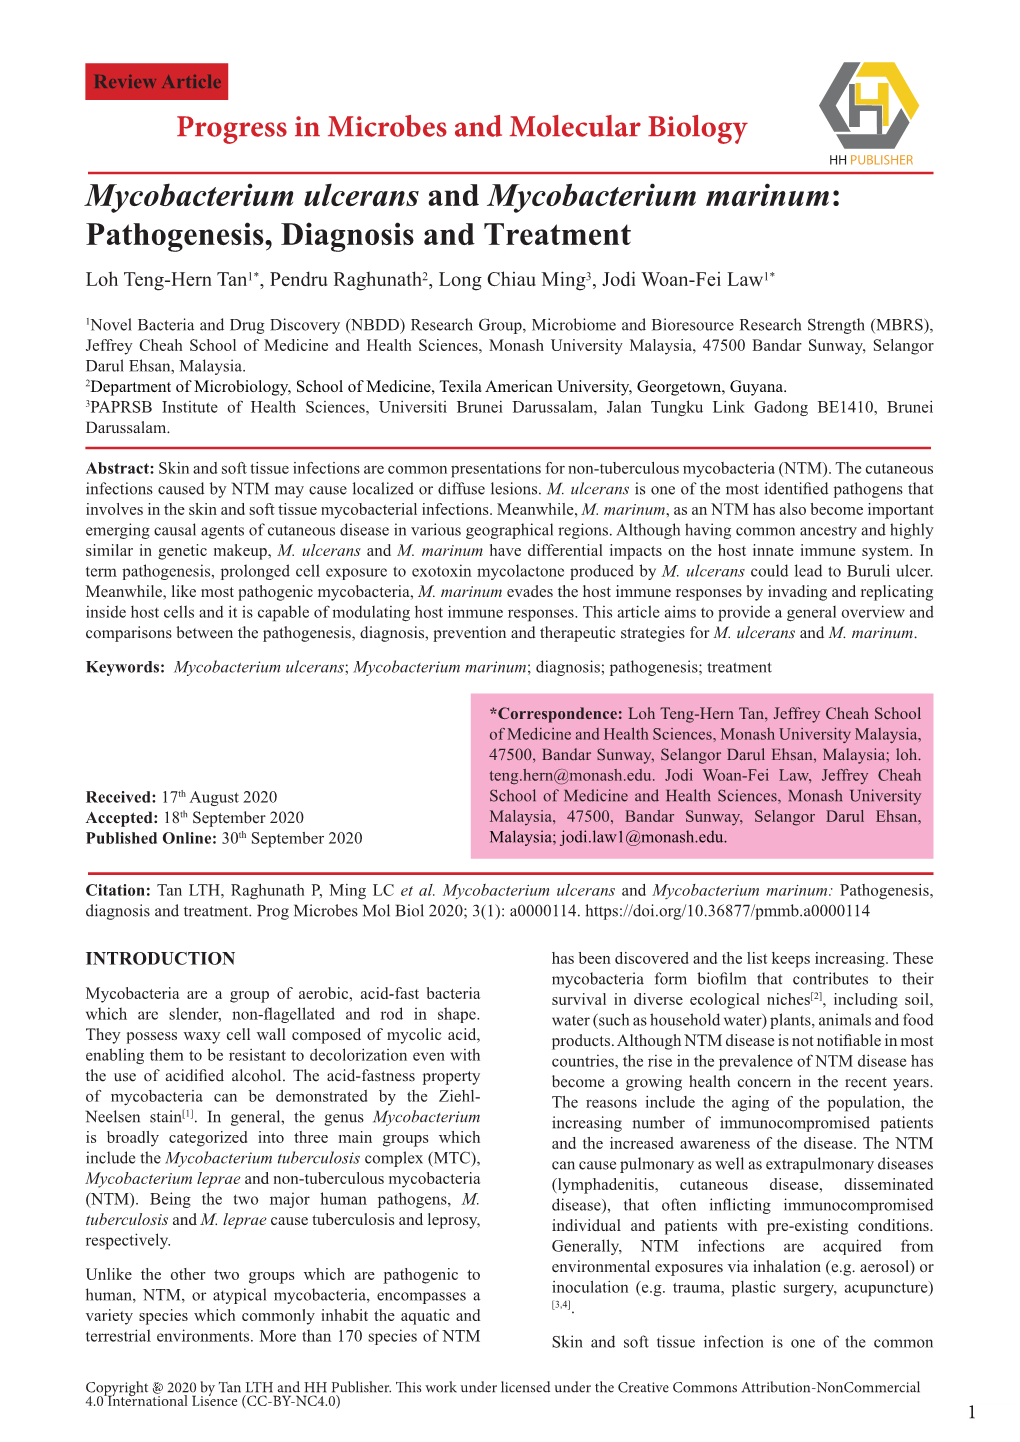 Mycobacterium Ulcerans and Mycobacterium Marinum: Pathogenesis, Diagnosis and Treatment Loh Teng-Hern Tan1*, Pendru Raghunath2, Long Chiau Ming3, Jodi Woan-Fei Law1*